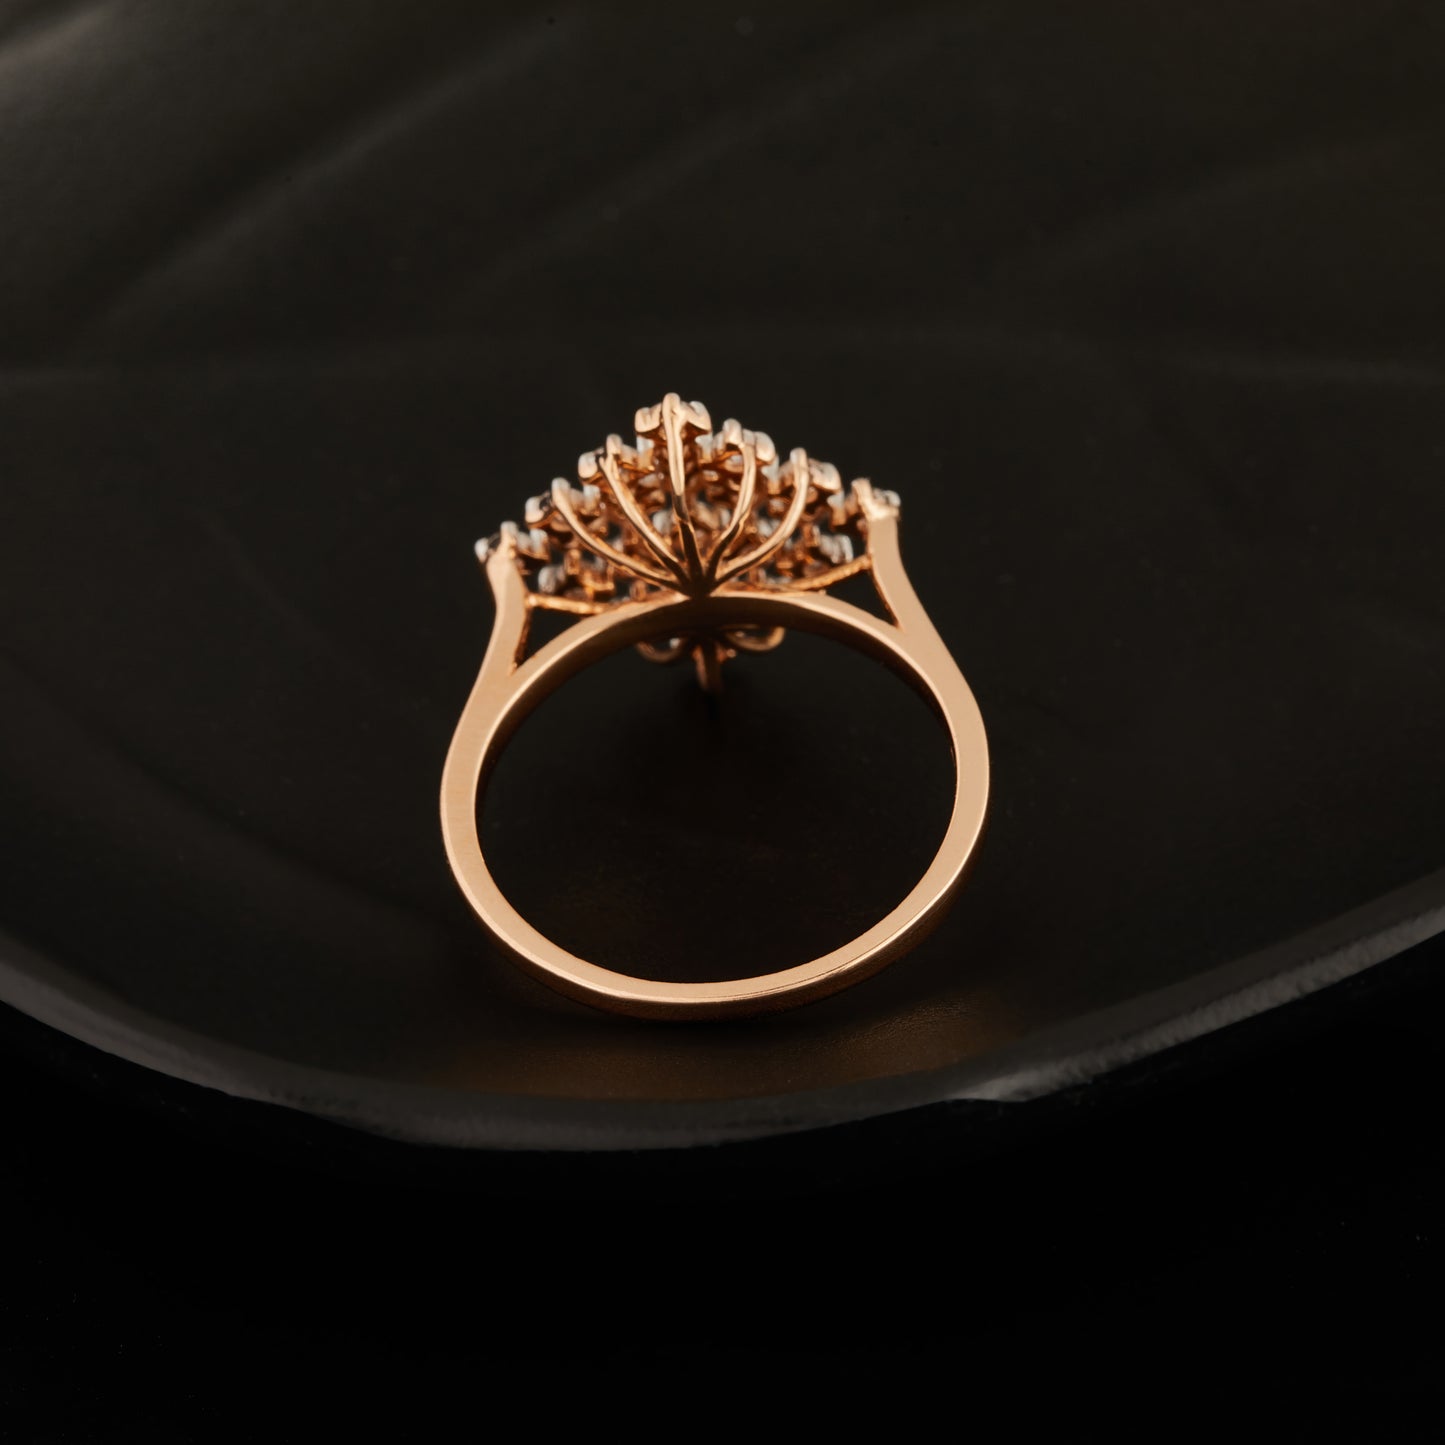 14k Rose Gold with Labgrown Diamond Ring.